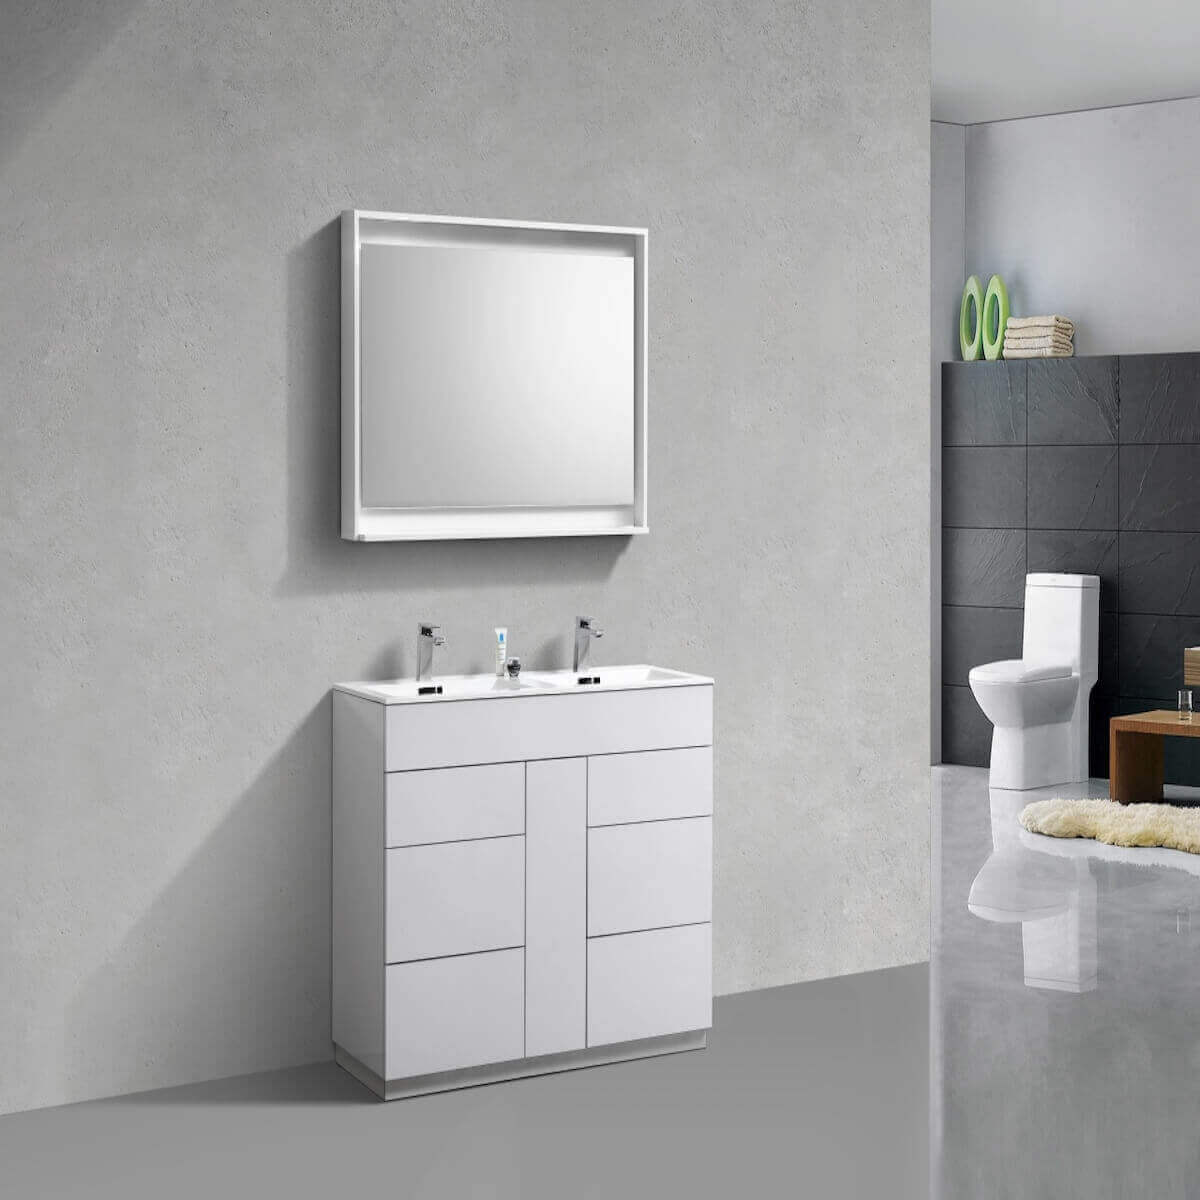 KubeBath Milano 48" Gloss White Freestanding Double Vanity KFM48D-GW in Bathroom #finish_gloss white